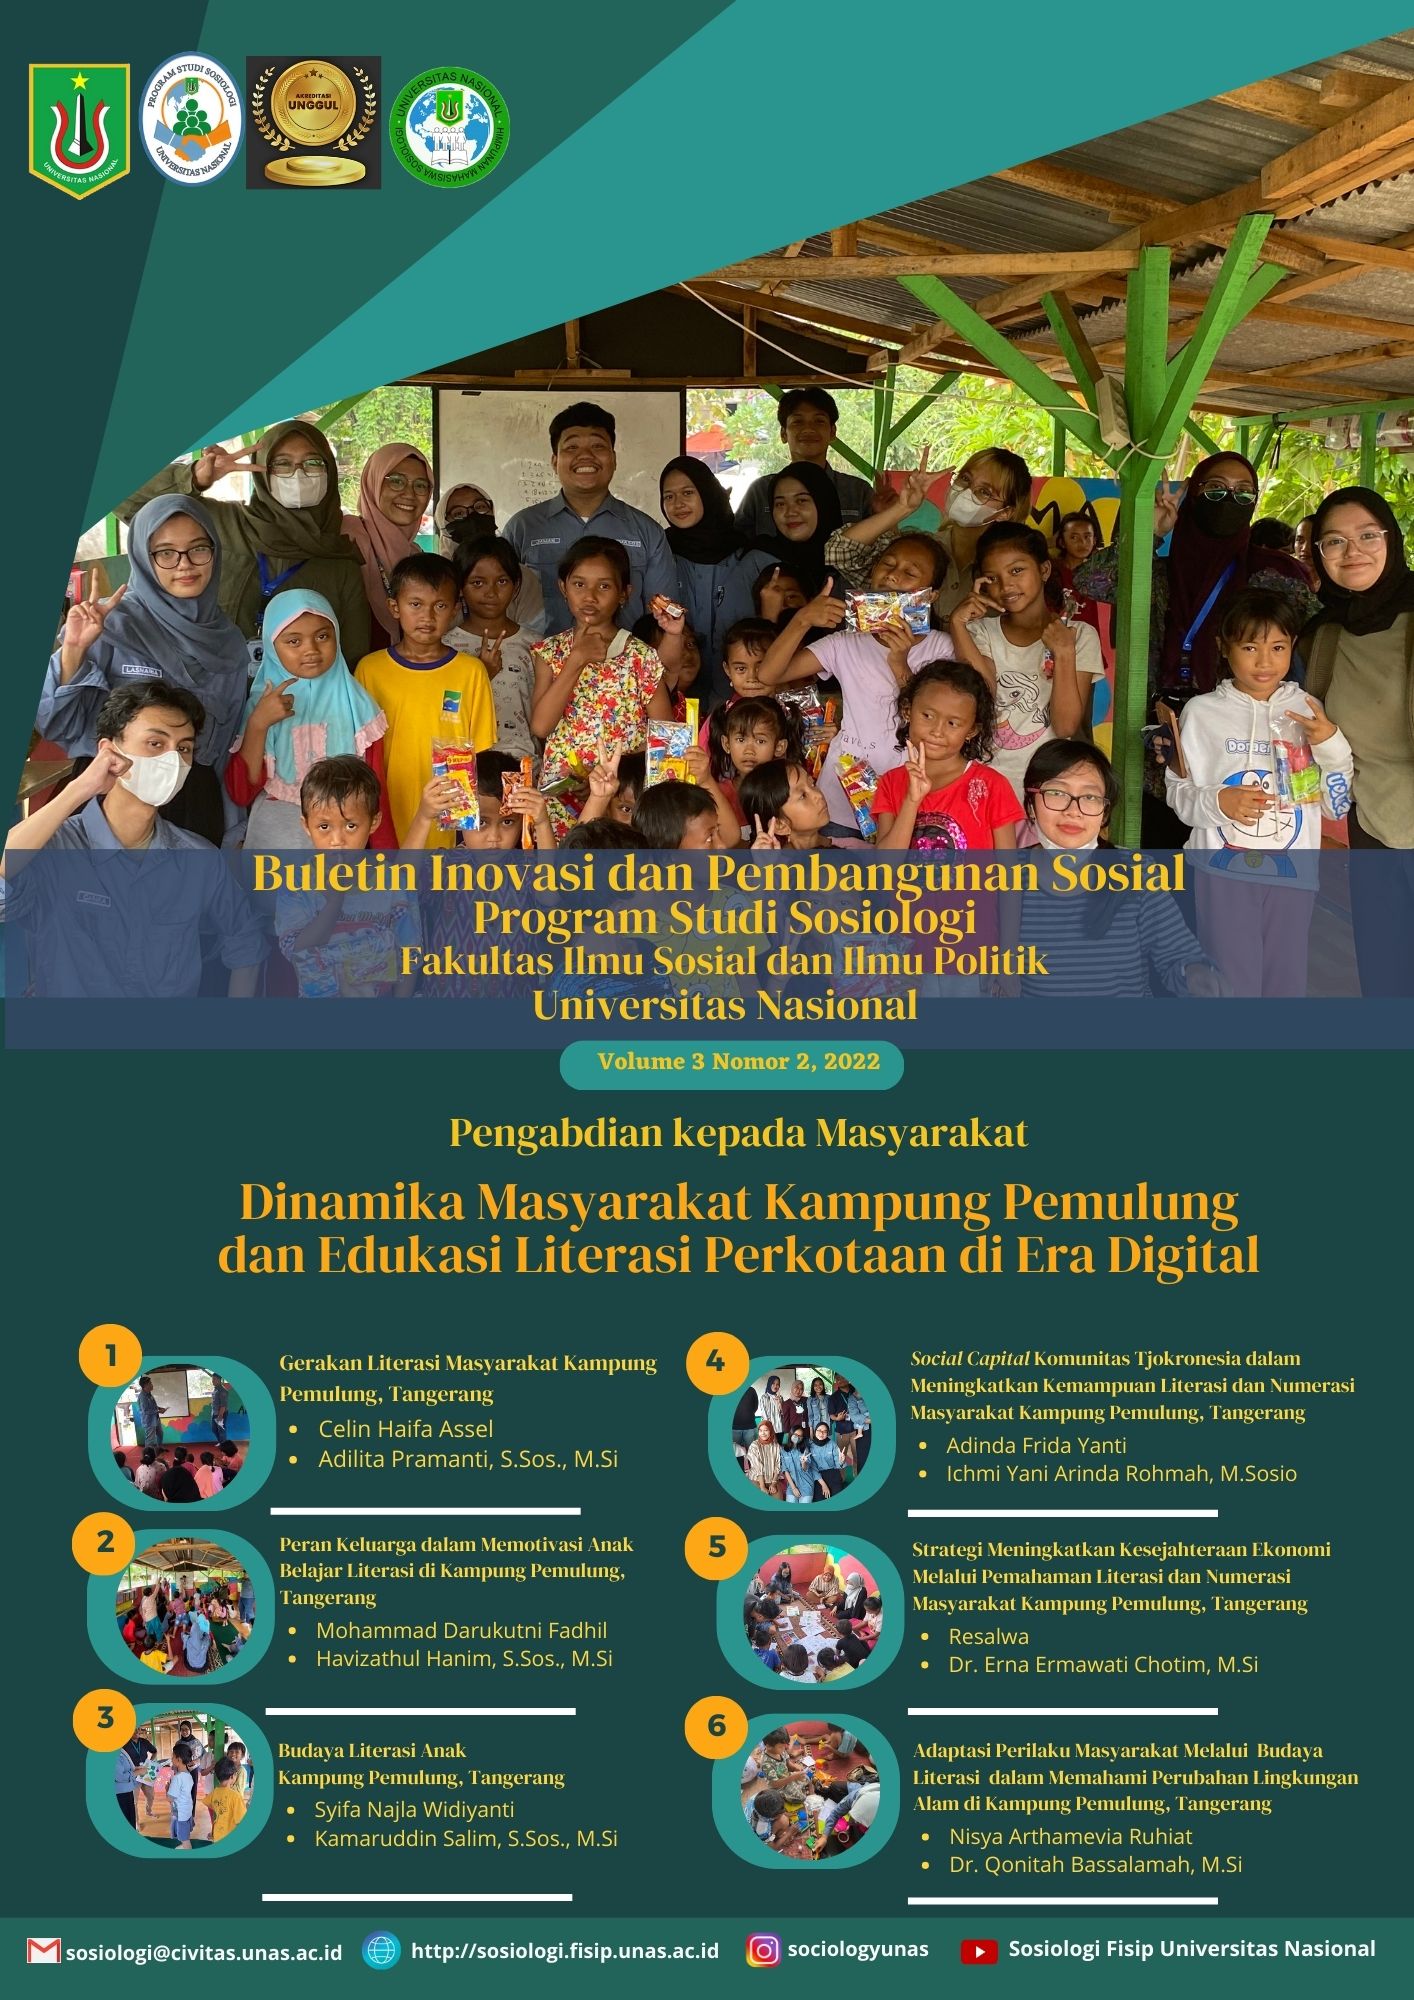 					Lihat Vol 3 No 2 (2022): Dinamika Masyarakat Kampung Pemulung dan Edukasi Literasi Perkotaan di Era Digital
				